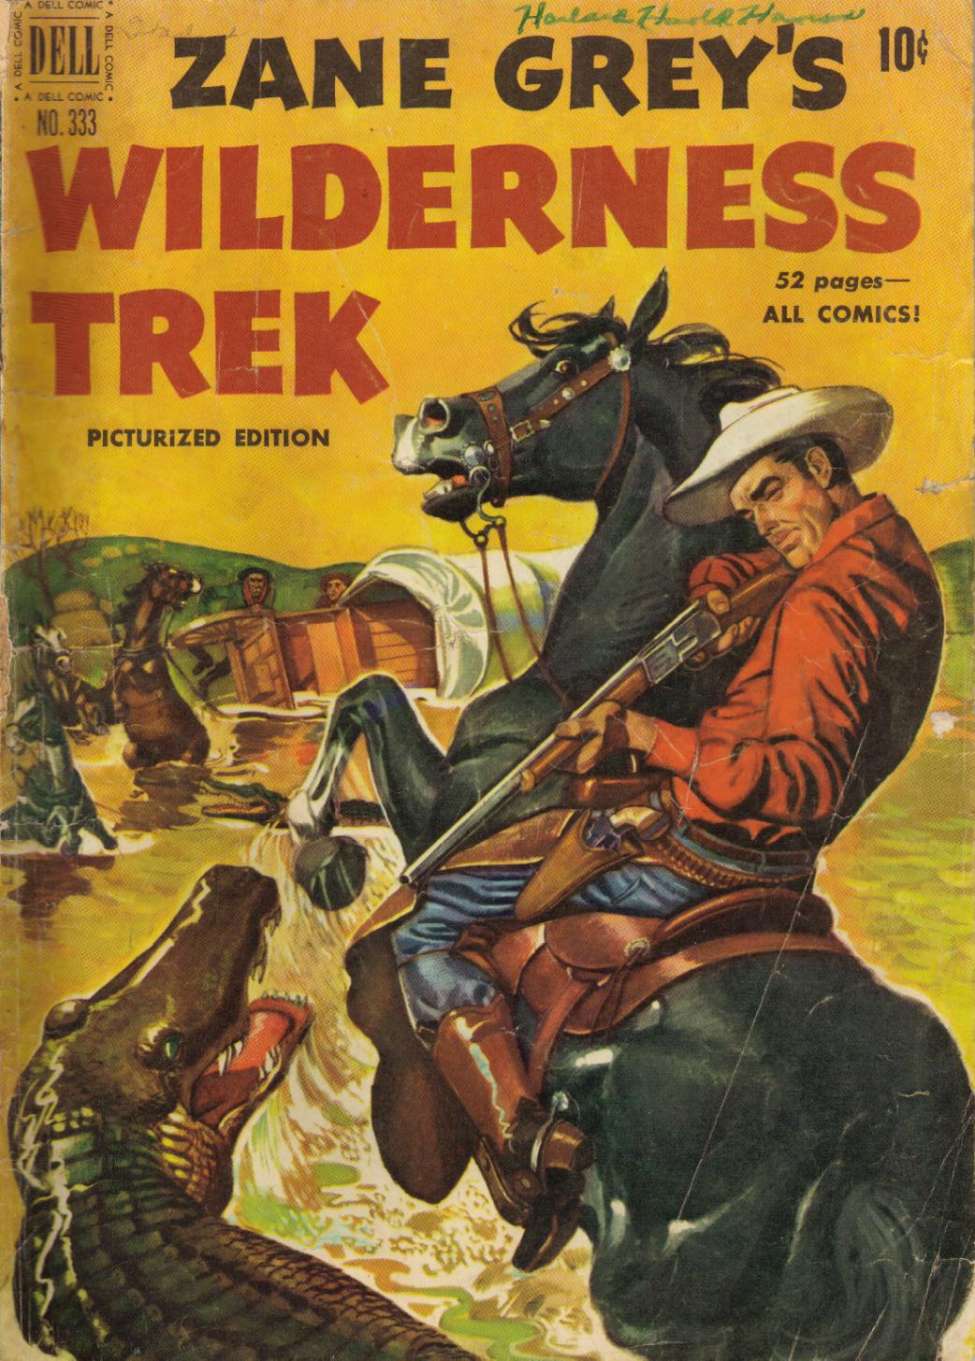 Comic Book Cover For 0333 - Zane Grey's Wilderness Trek